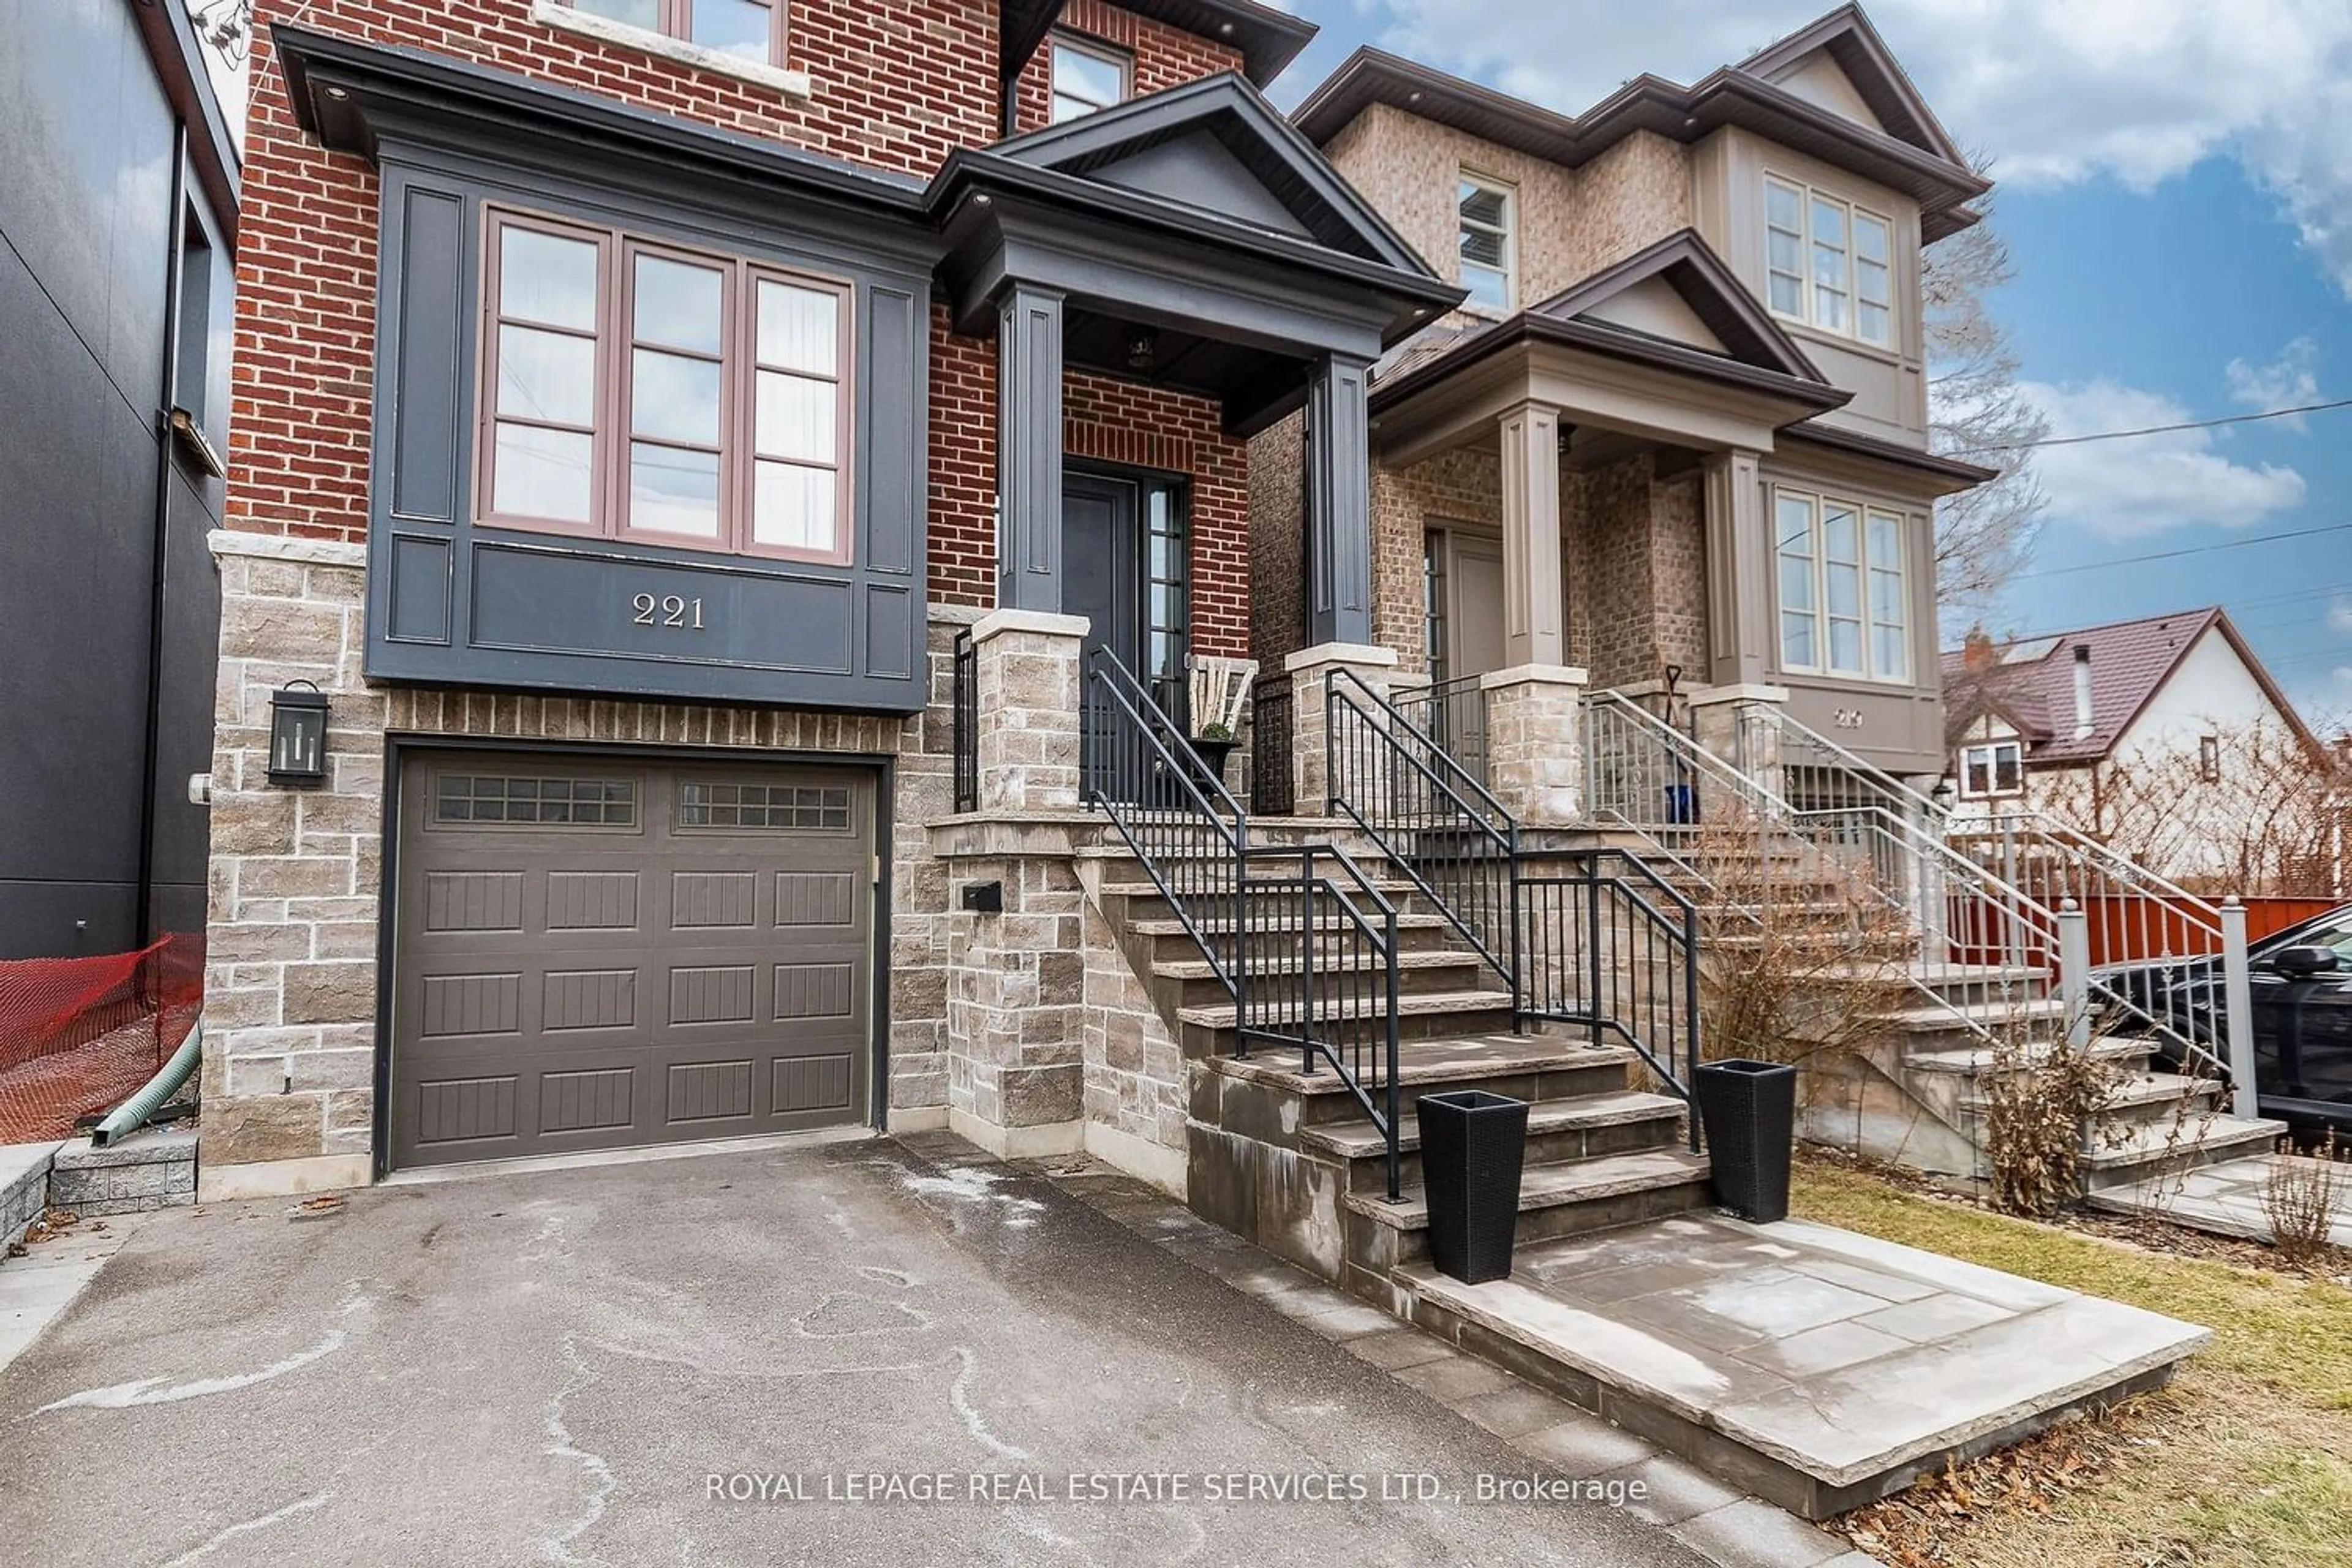 Home with brick exterior material for 221 Beta St, Toronto Ontario M8W 4H7